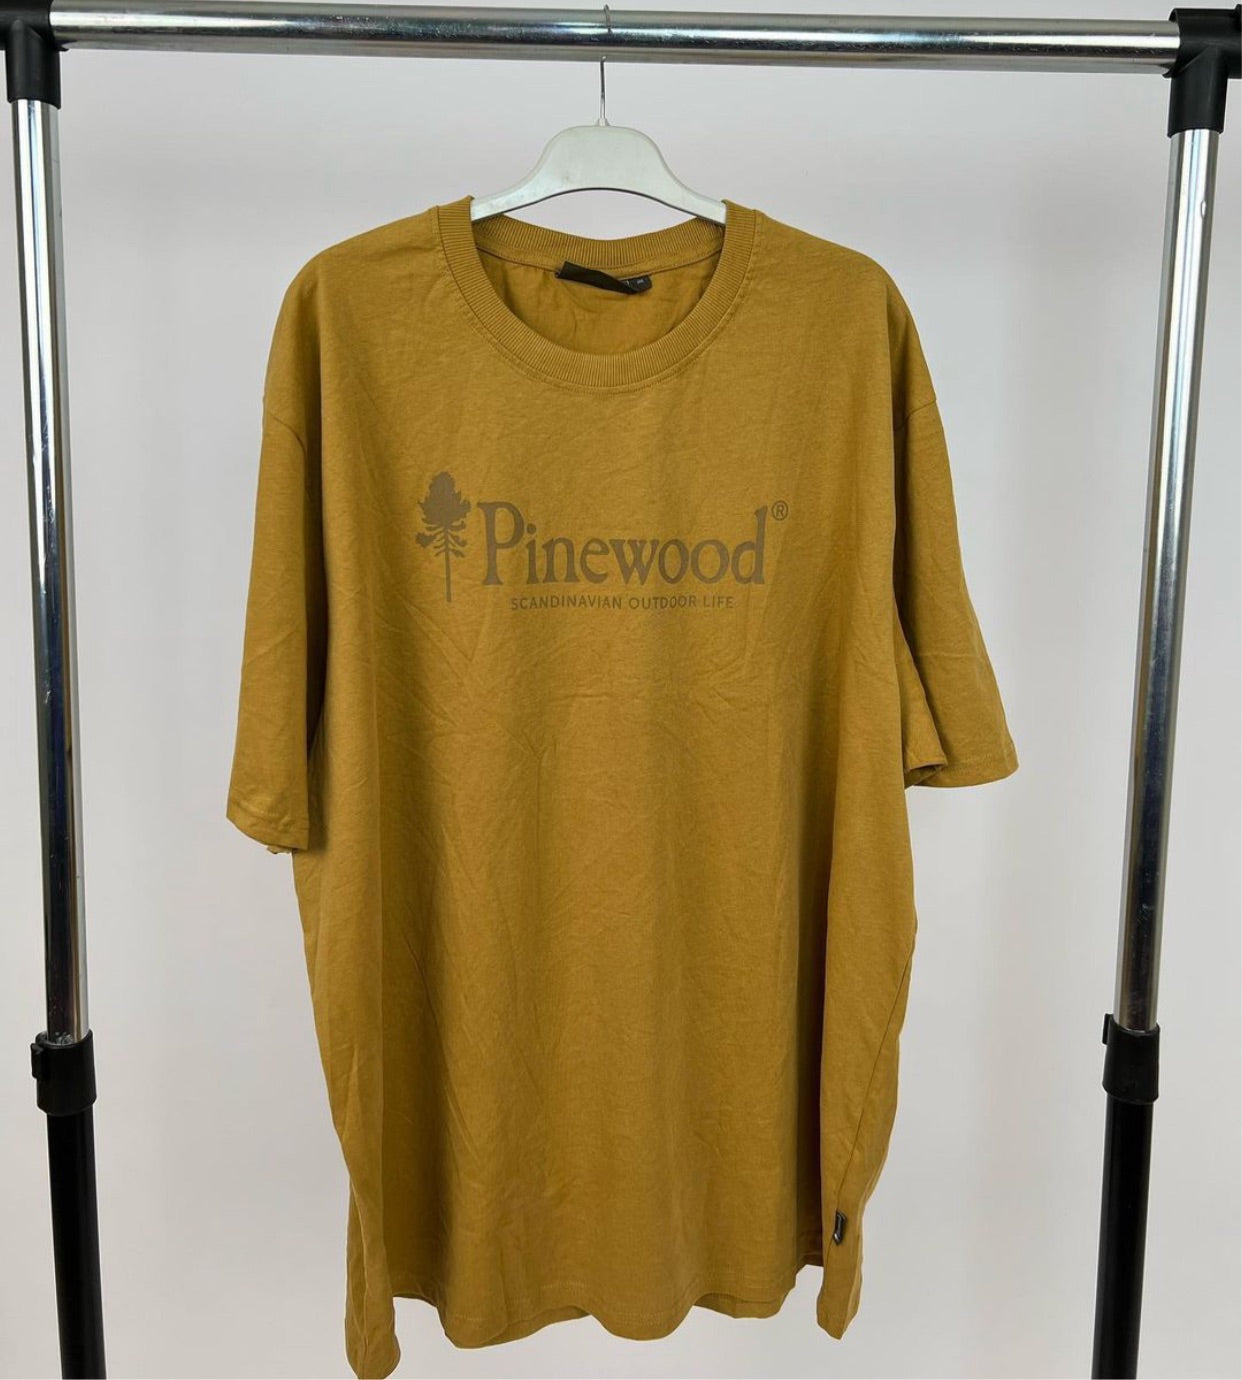 Pinewood tee